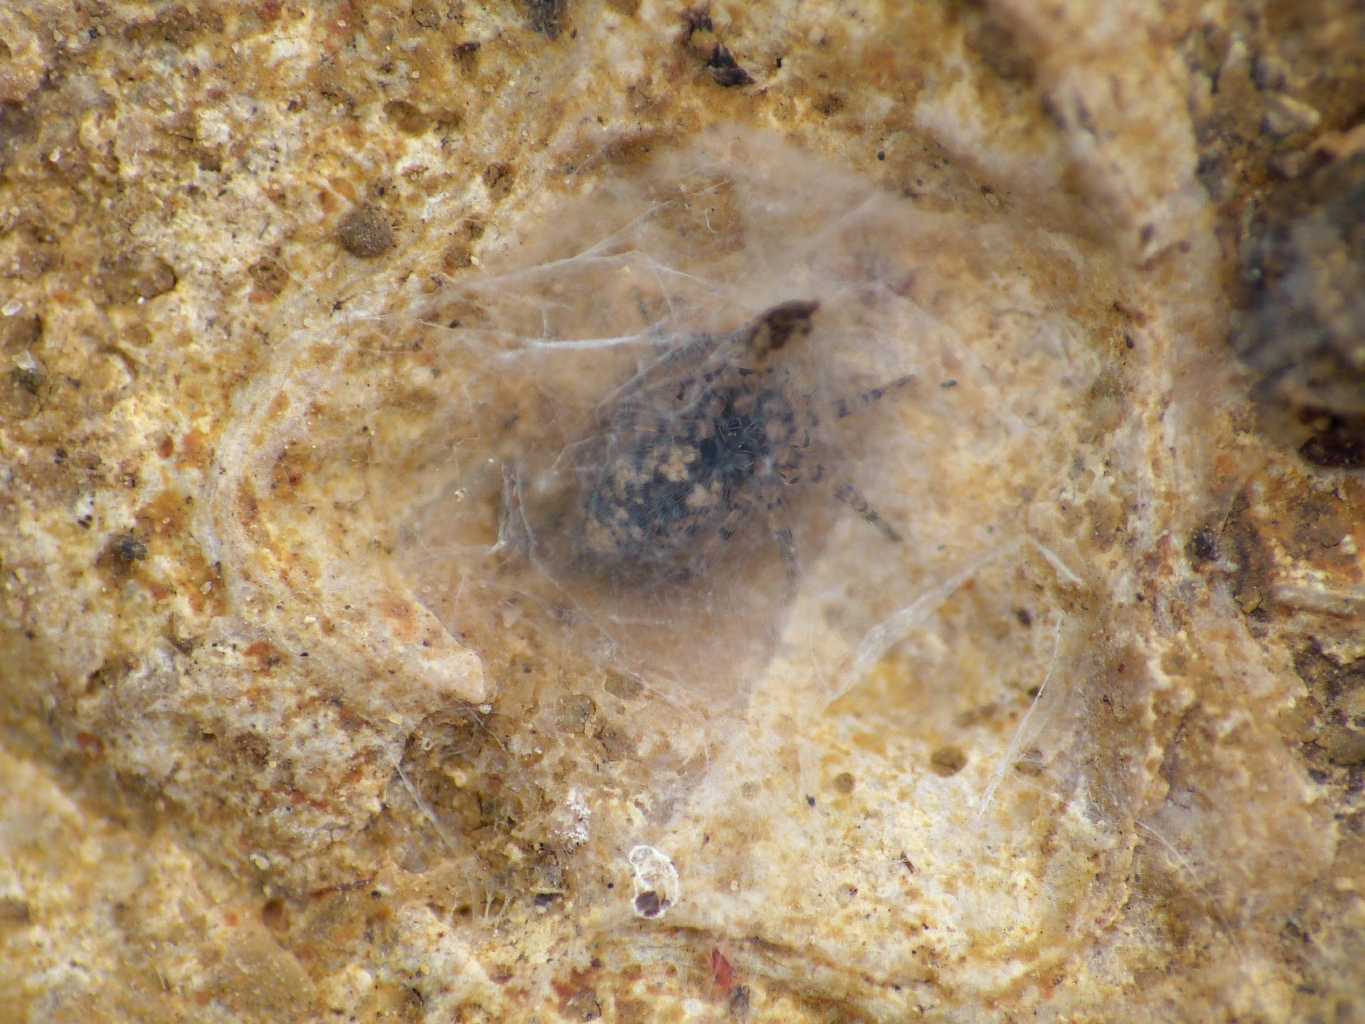 Oecobius maculatus sotto una pietra - Santa Severa (RM)